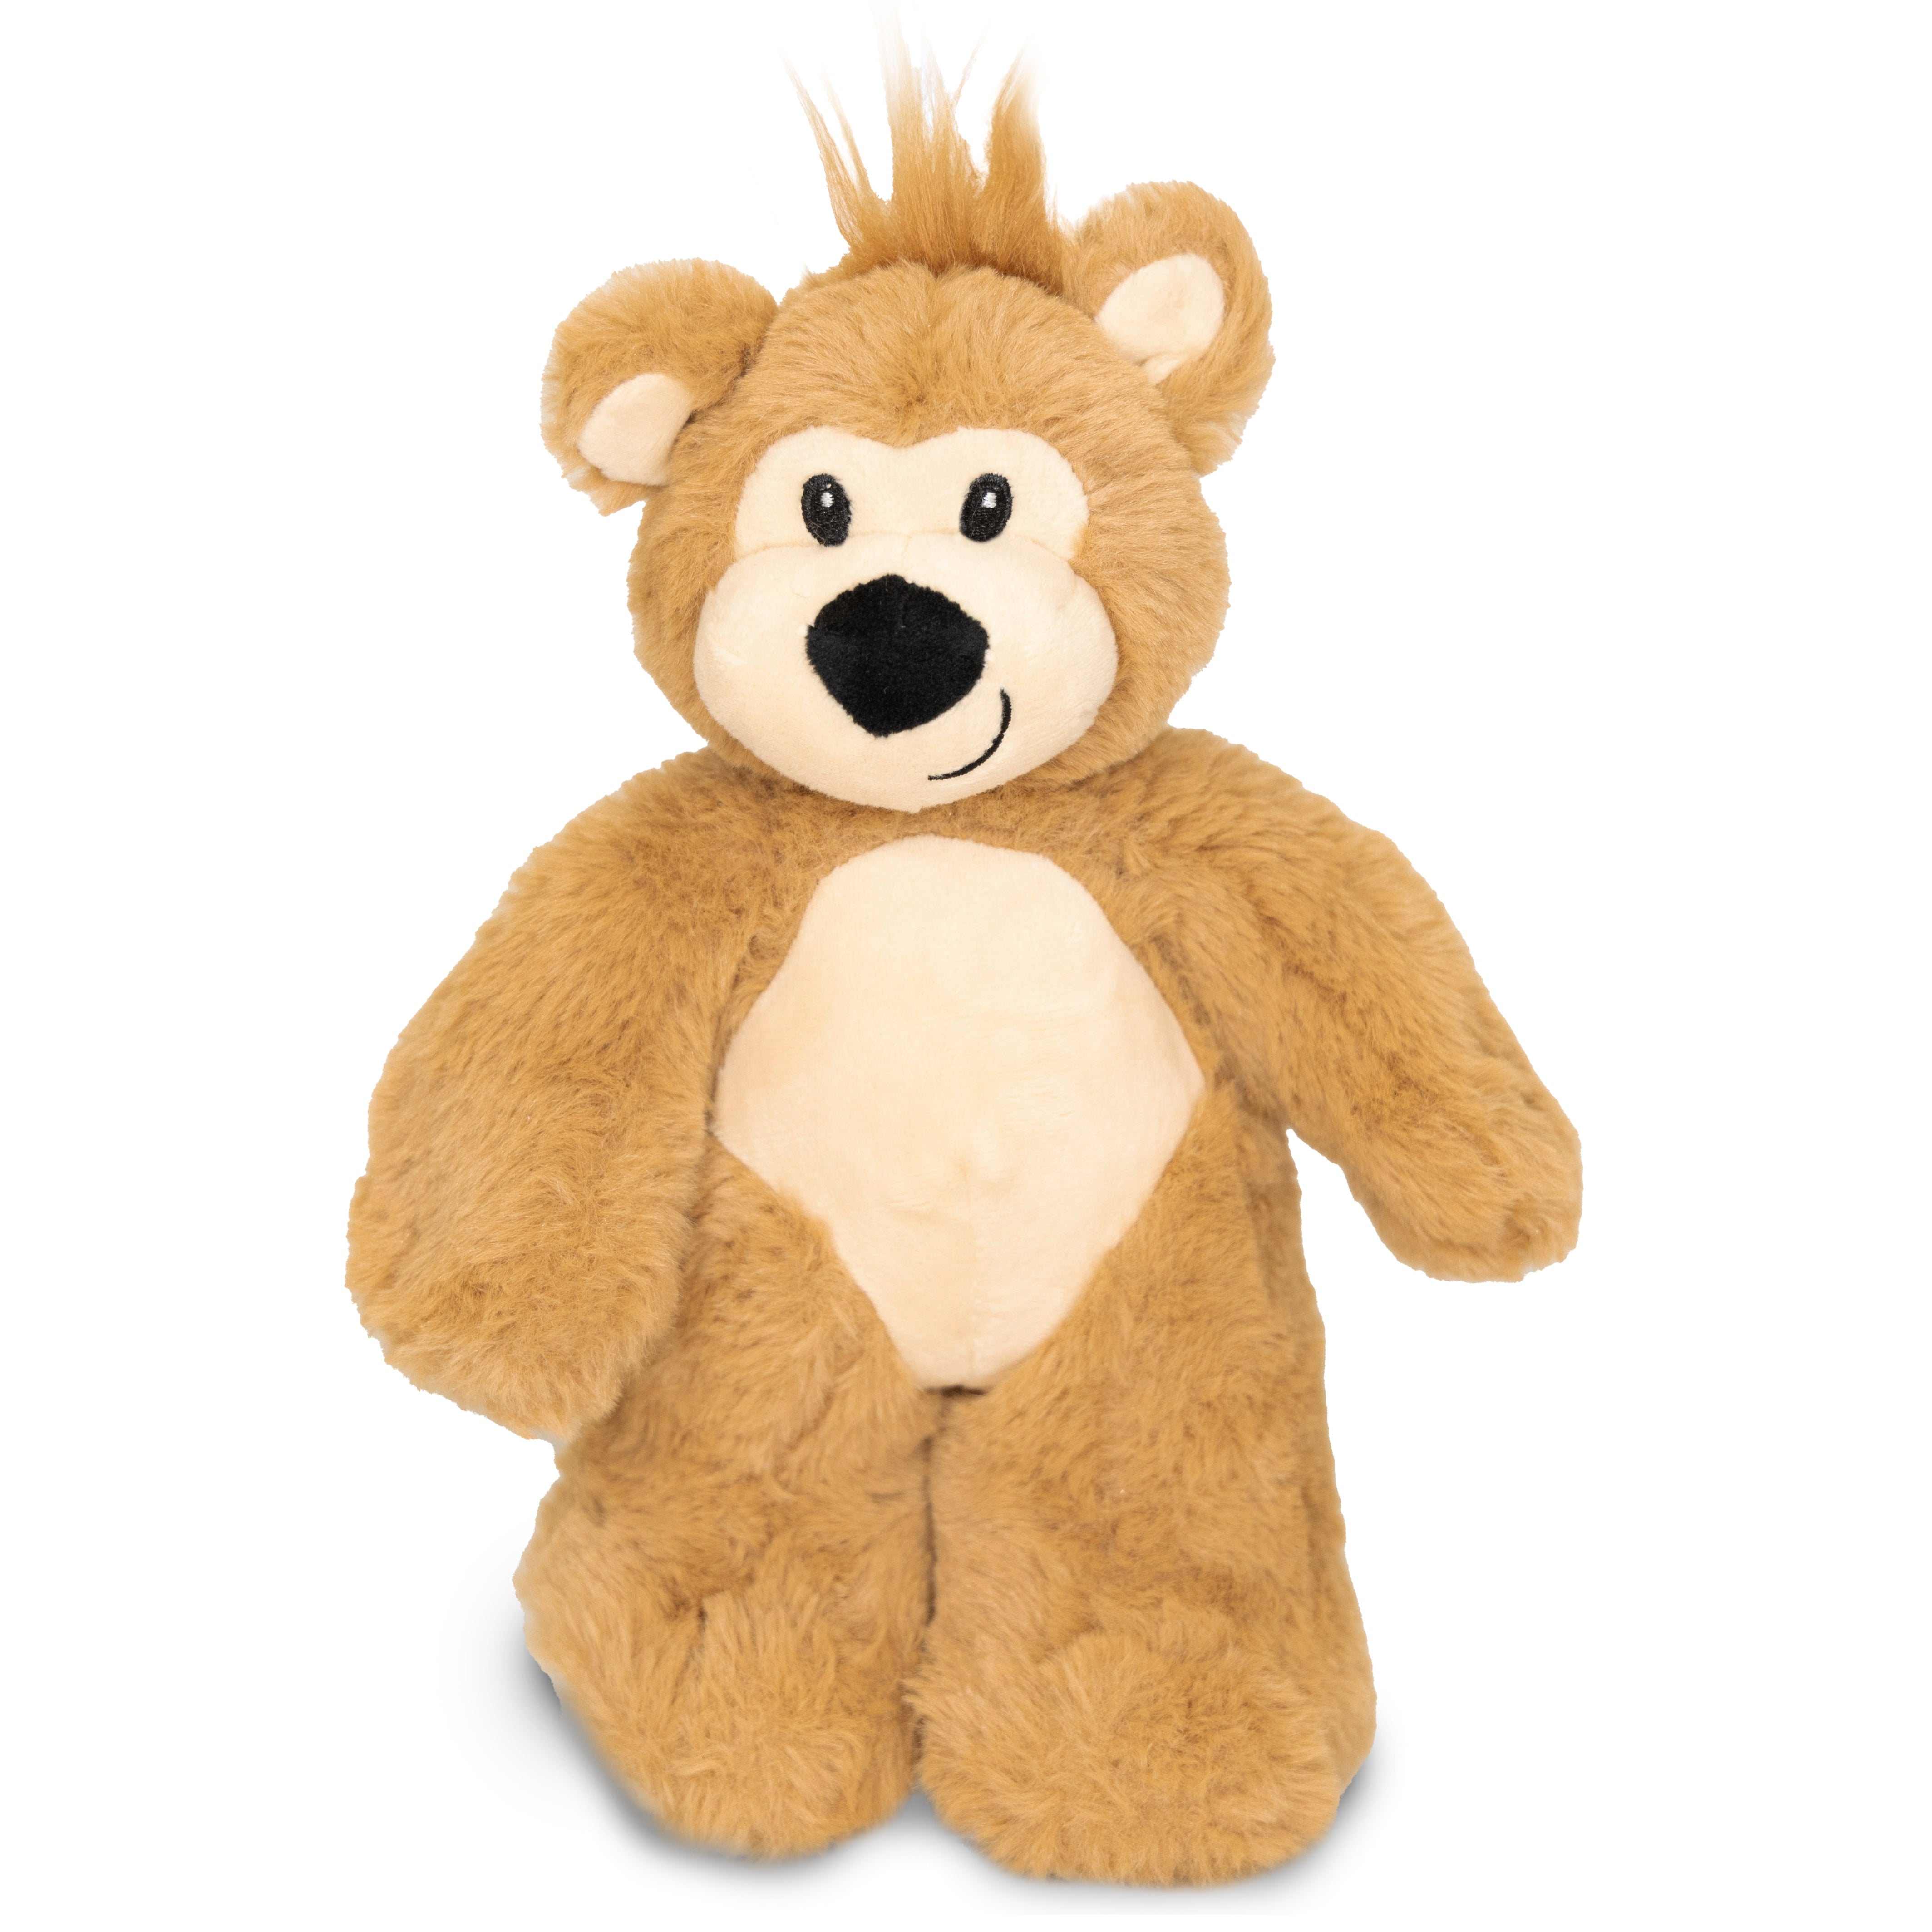 Pawley the Teddy Bear | Standing 14" Stuffed Animal